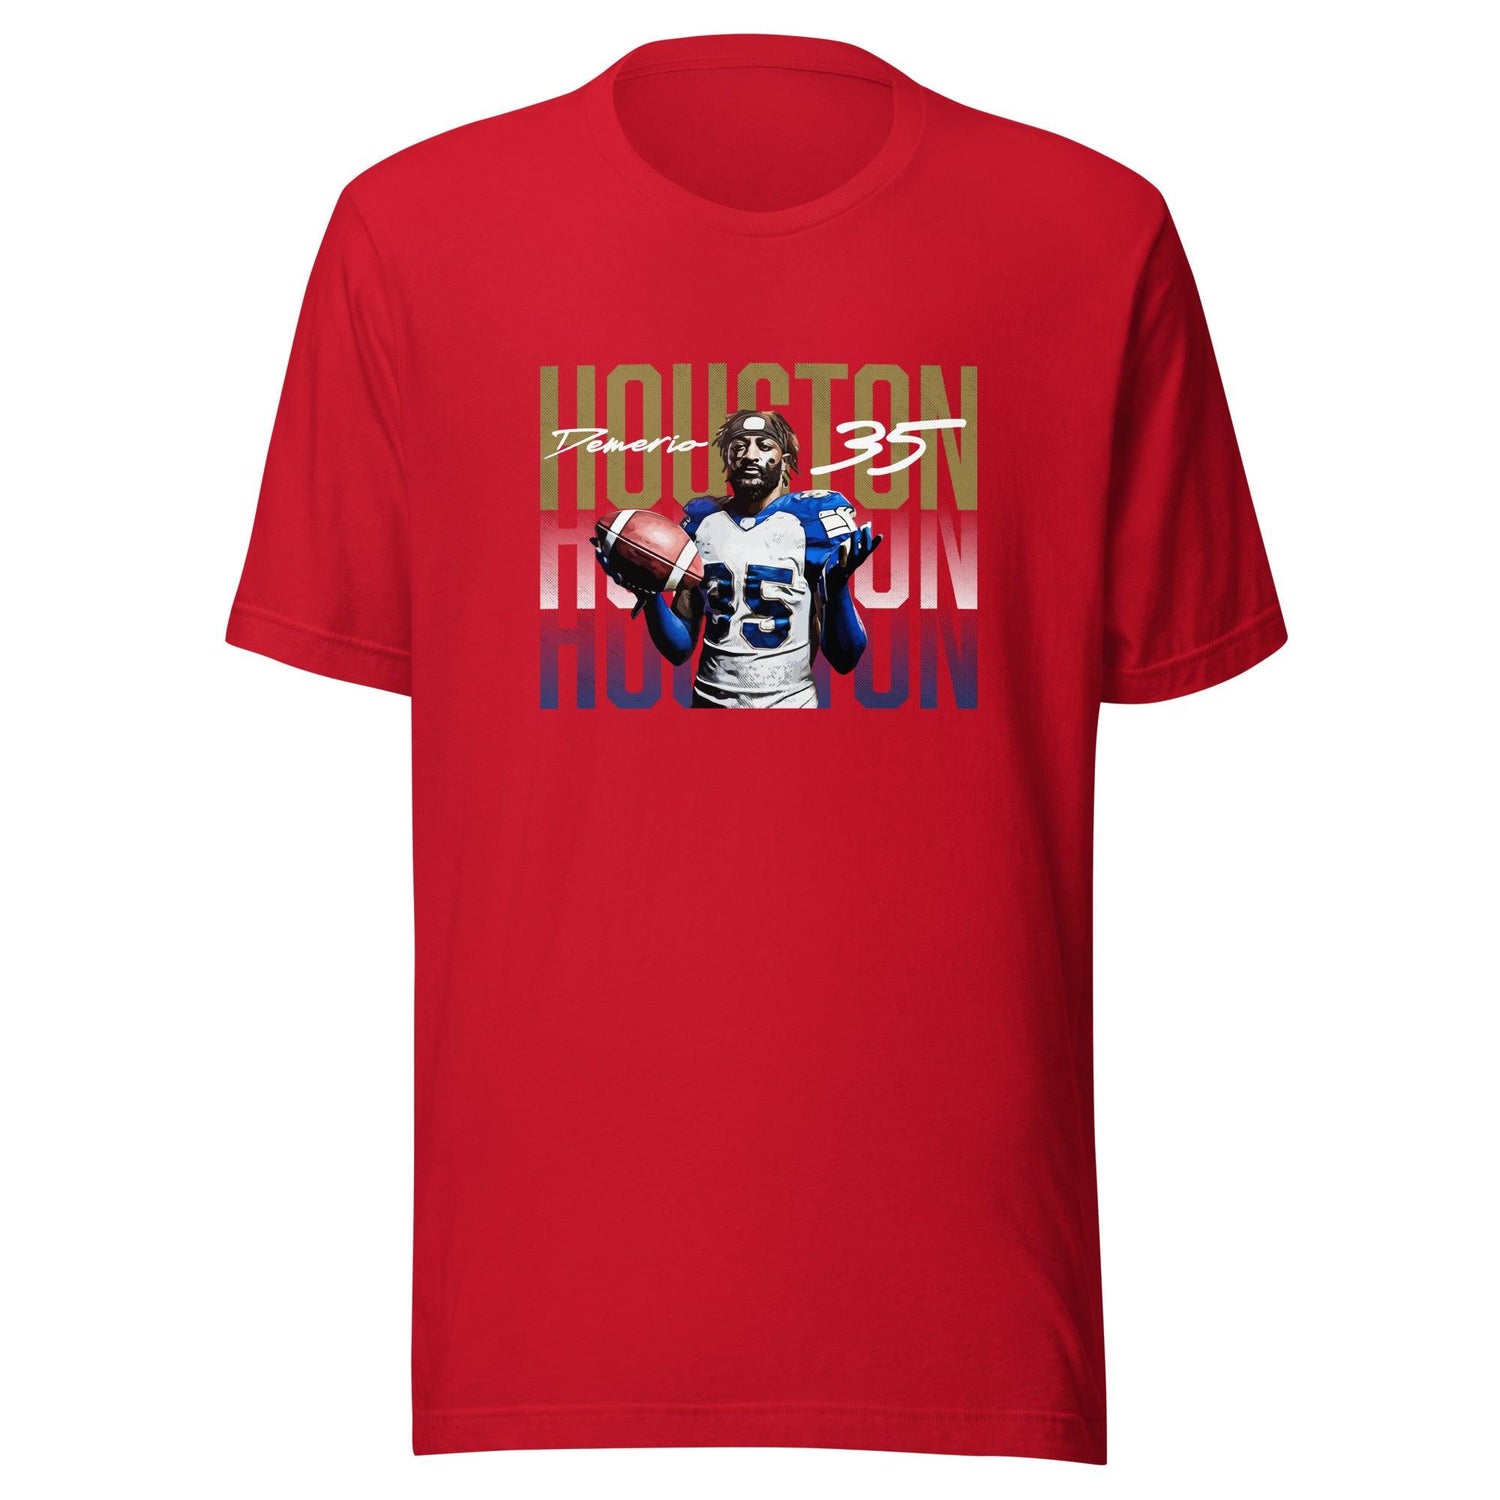 Demerio Houston "Gameday" t-shirt - Fan Arch